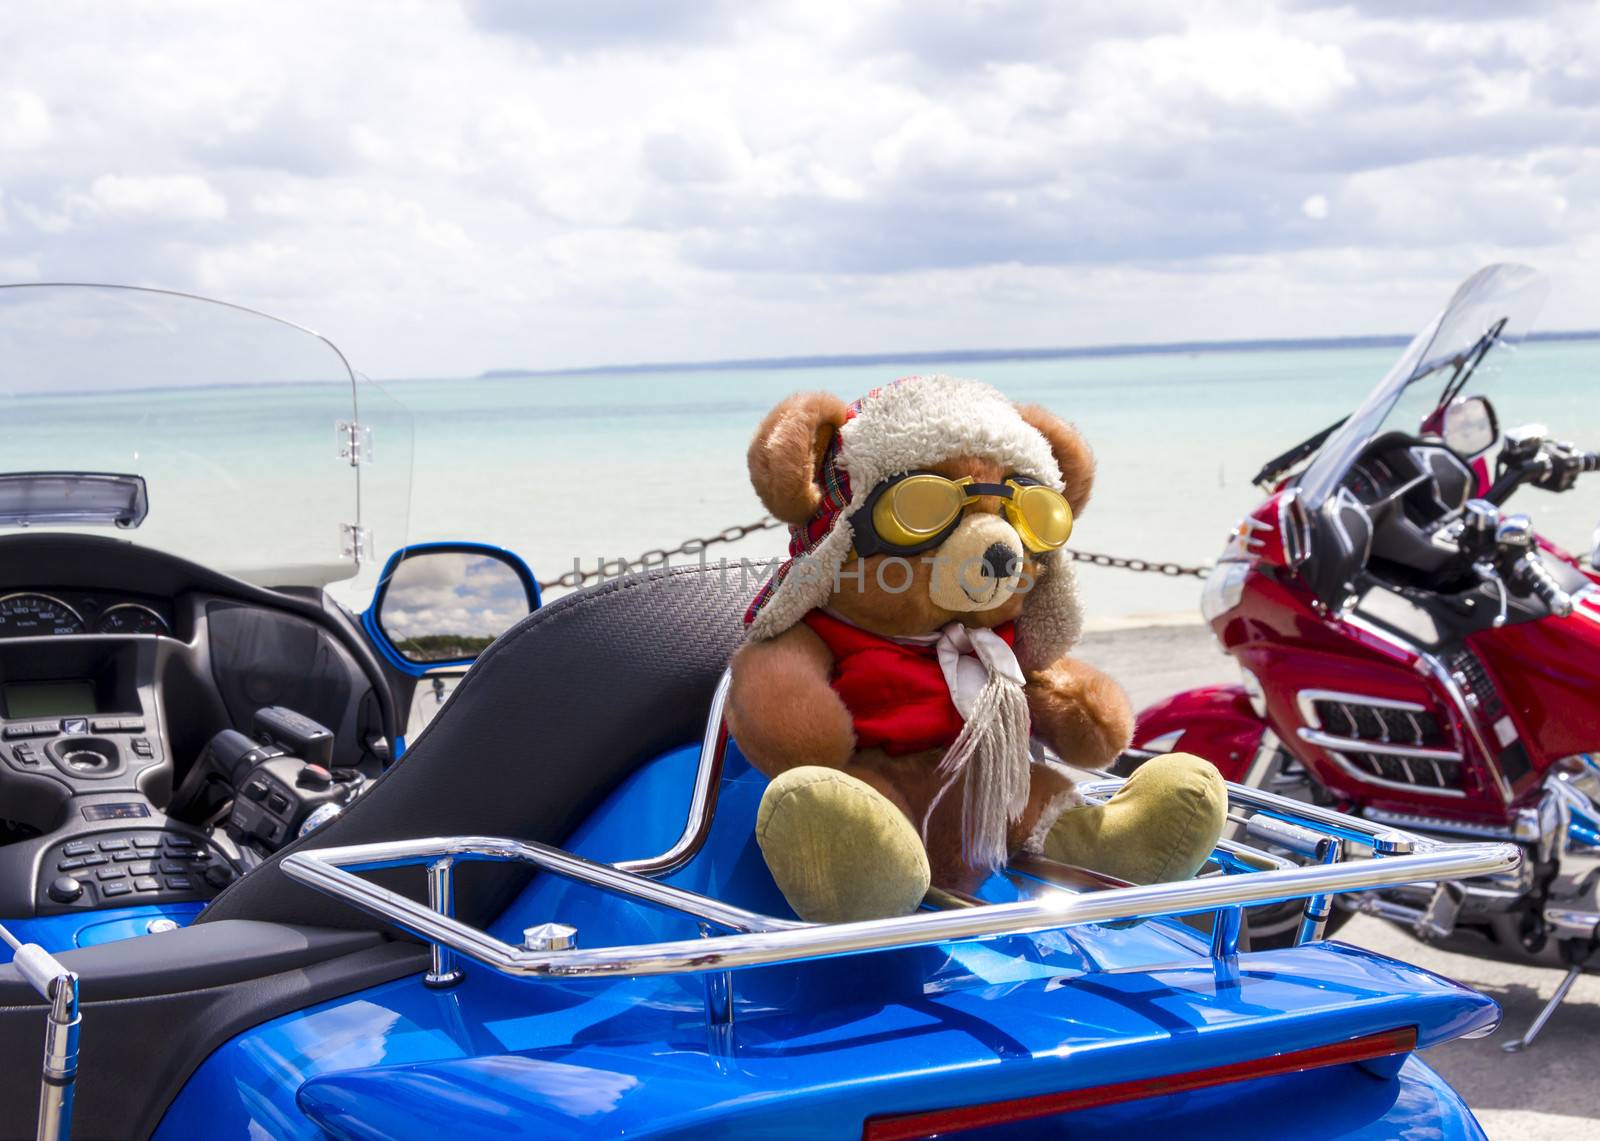 Teddy Bear toy on the blue motorbike on a seashore